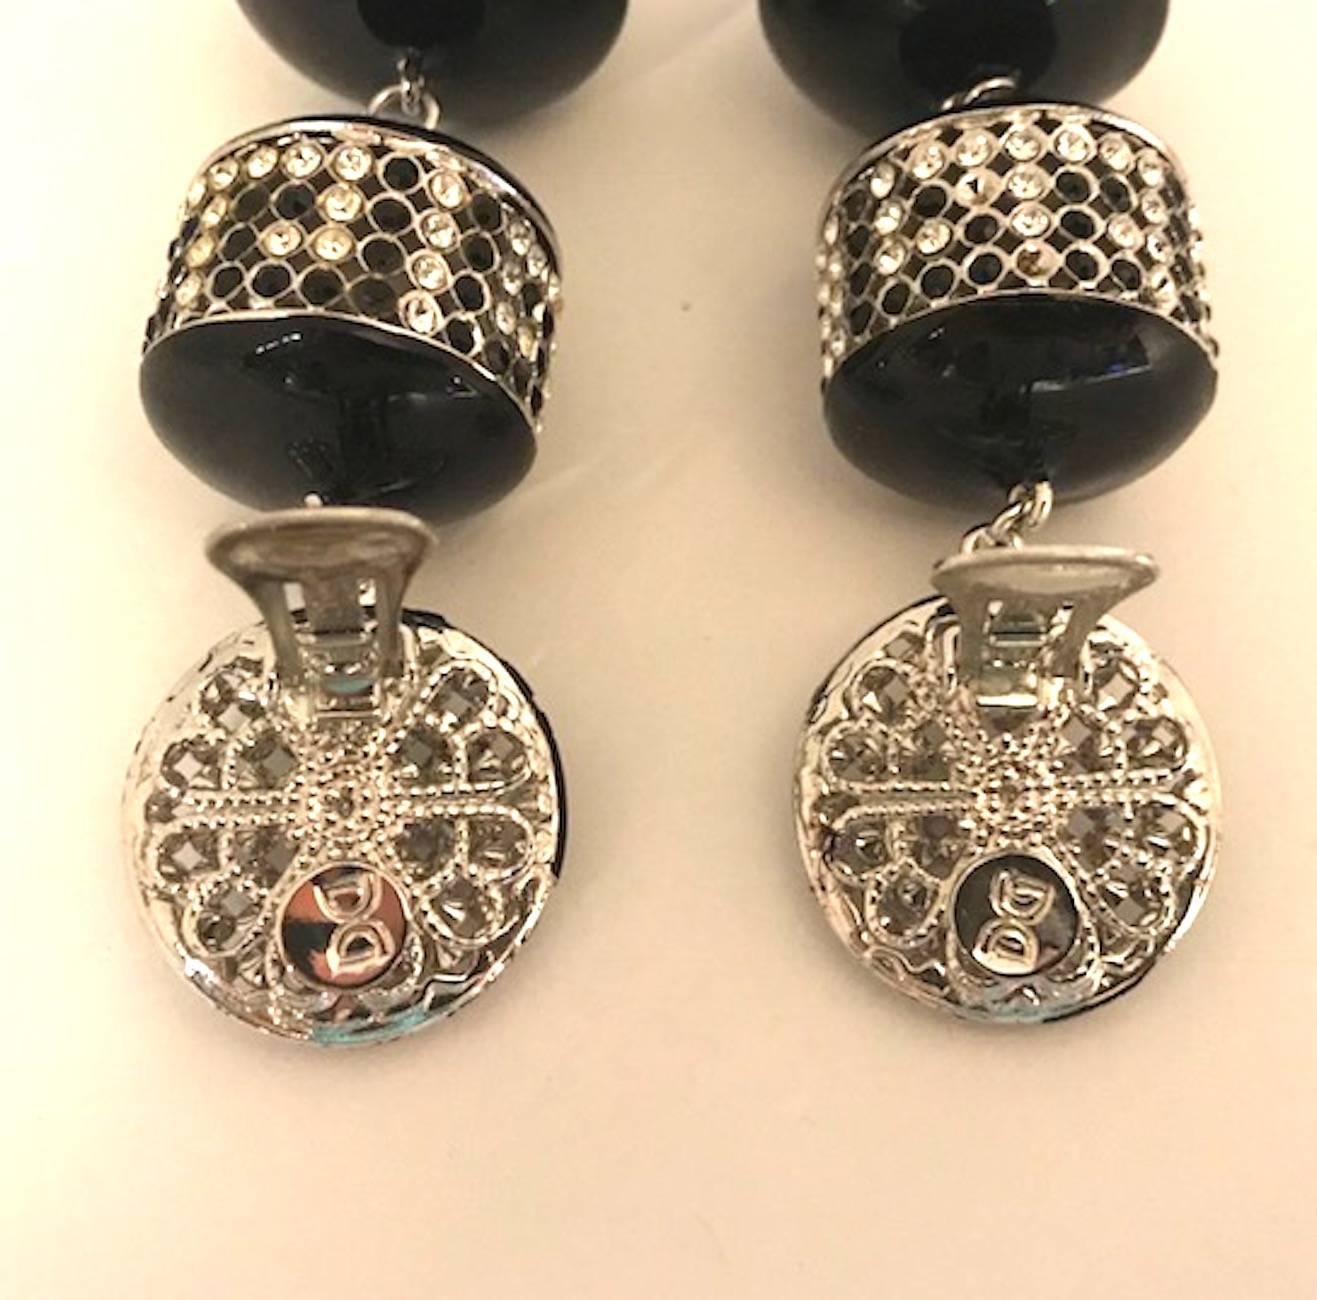 De Liguoro black & rhinestone pendant earrings from Elsa Martinelli's collection 2